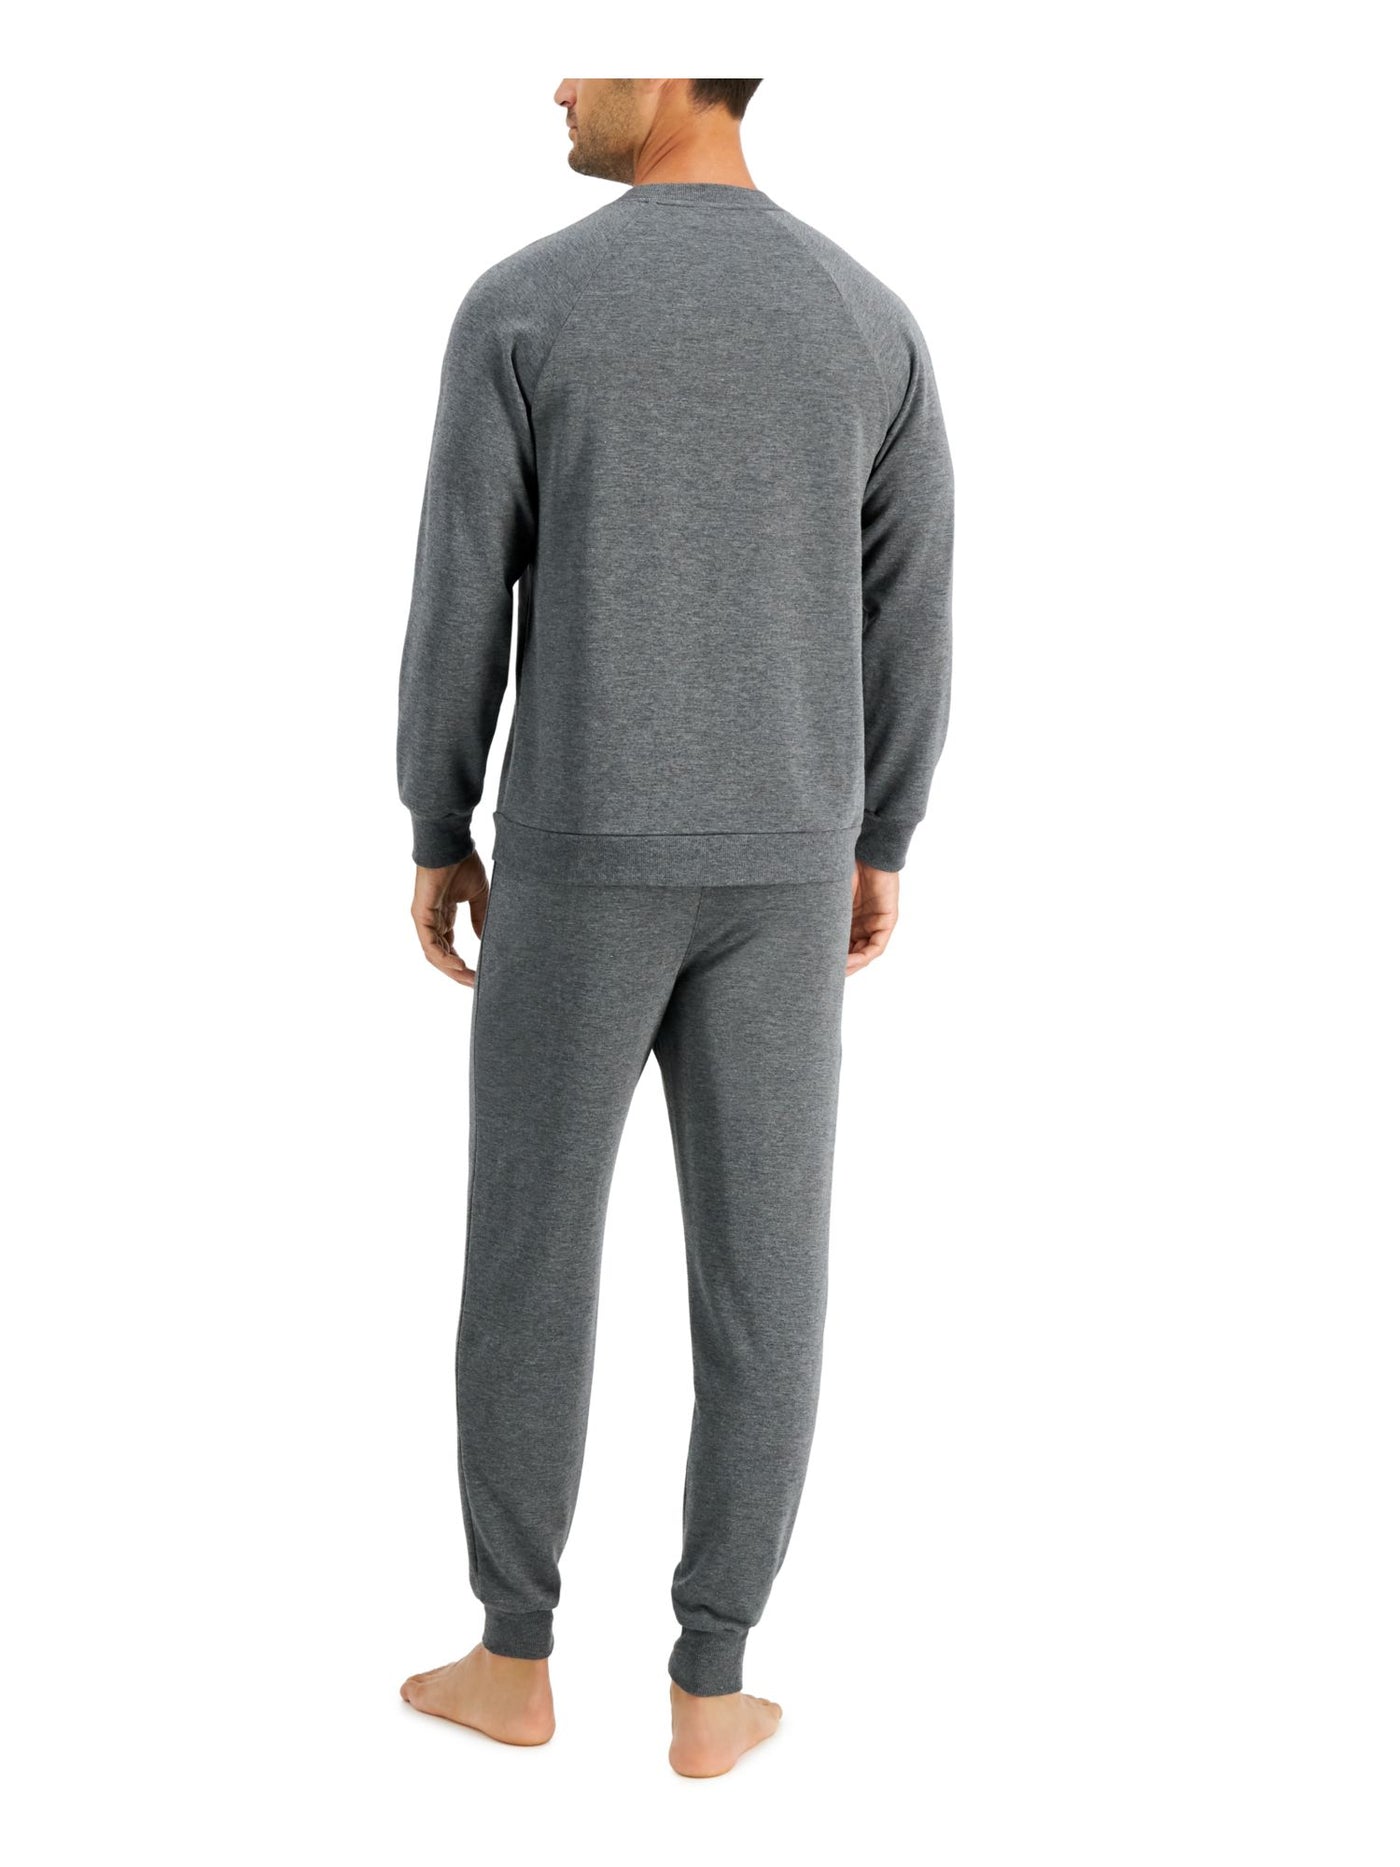 FAMILY PJs Mens Gray Graphic Drawstring Long Sleeve T-Shirt Top Cuffed Pants Pajamas M